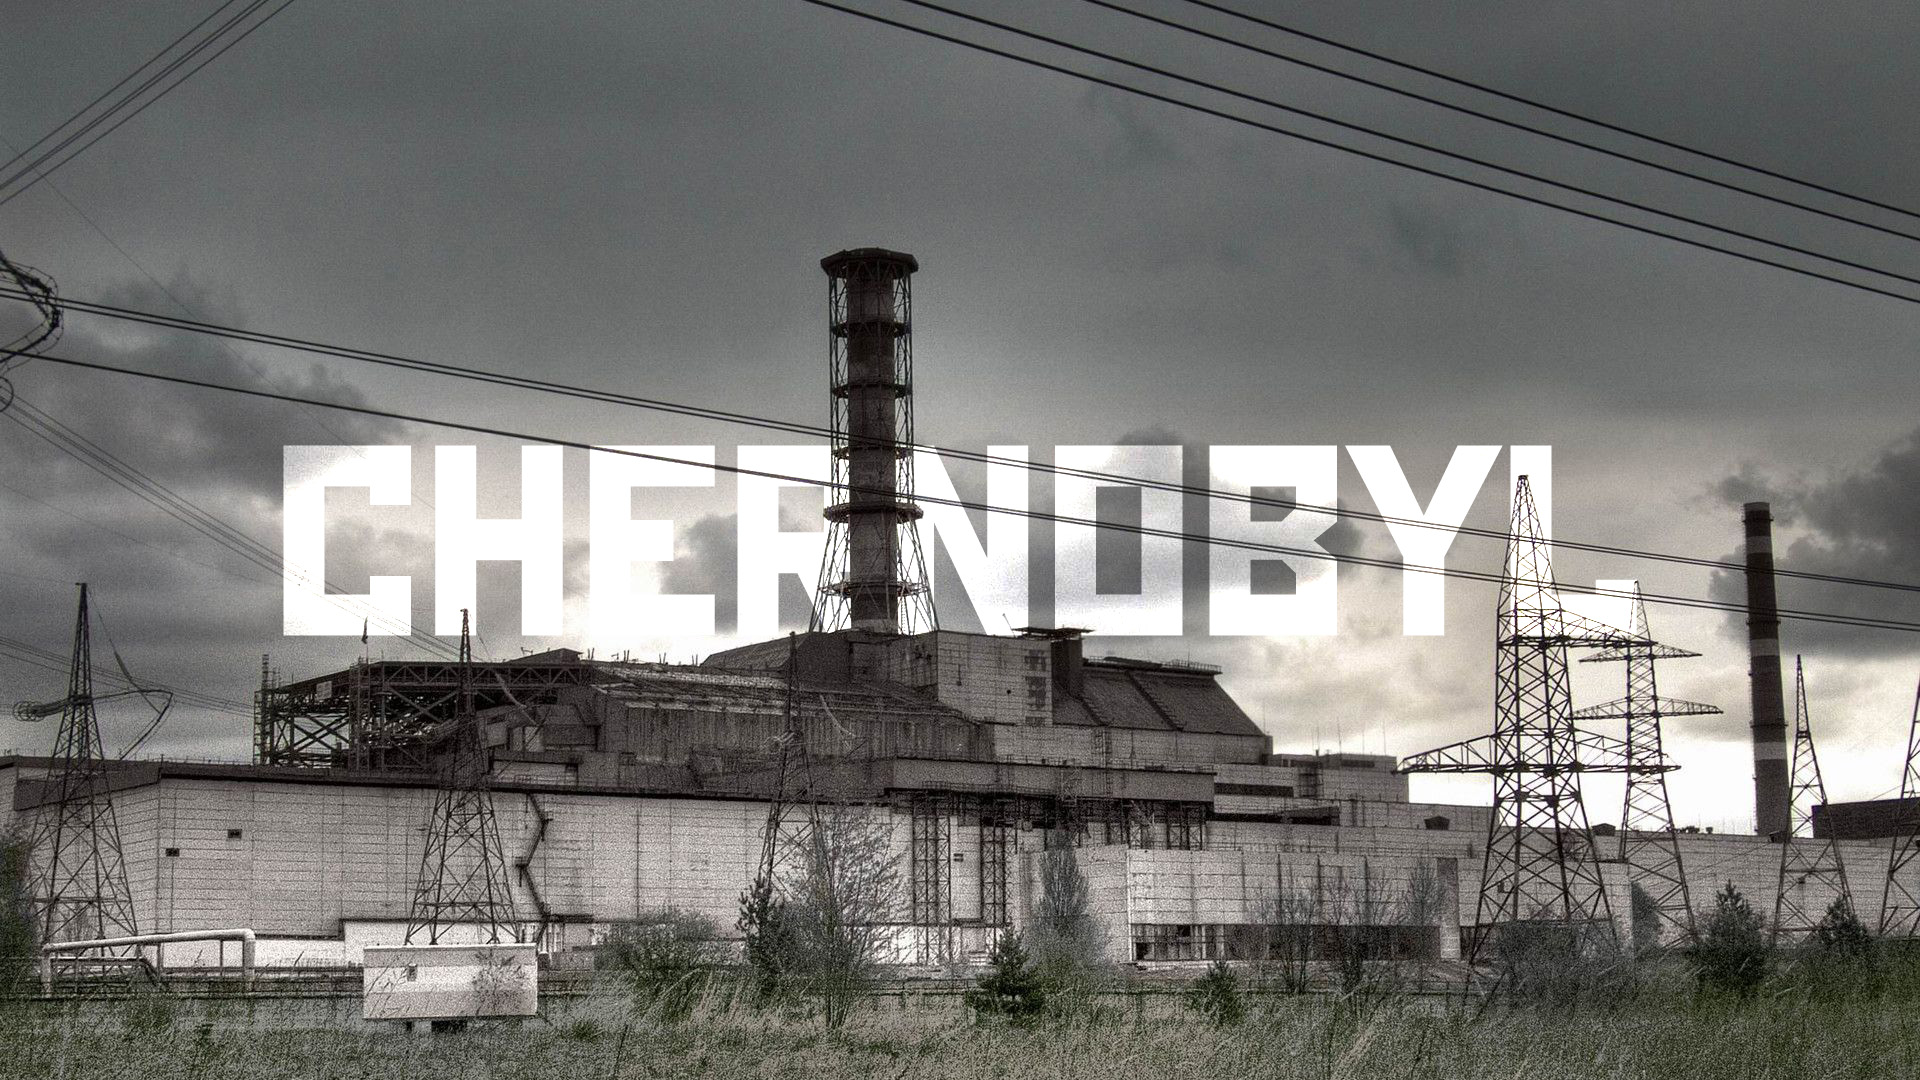 Tšernobyl 35 vuotta – Fukushima 10 vuotta